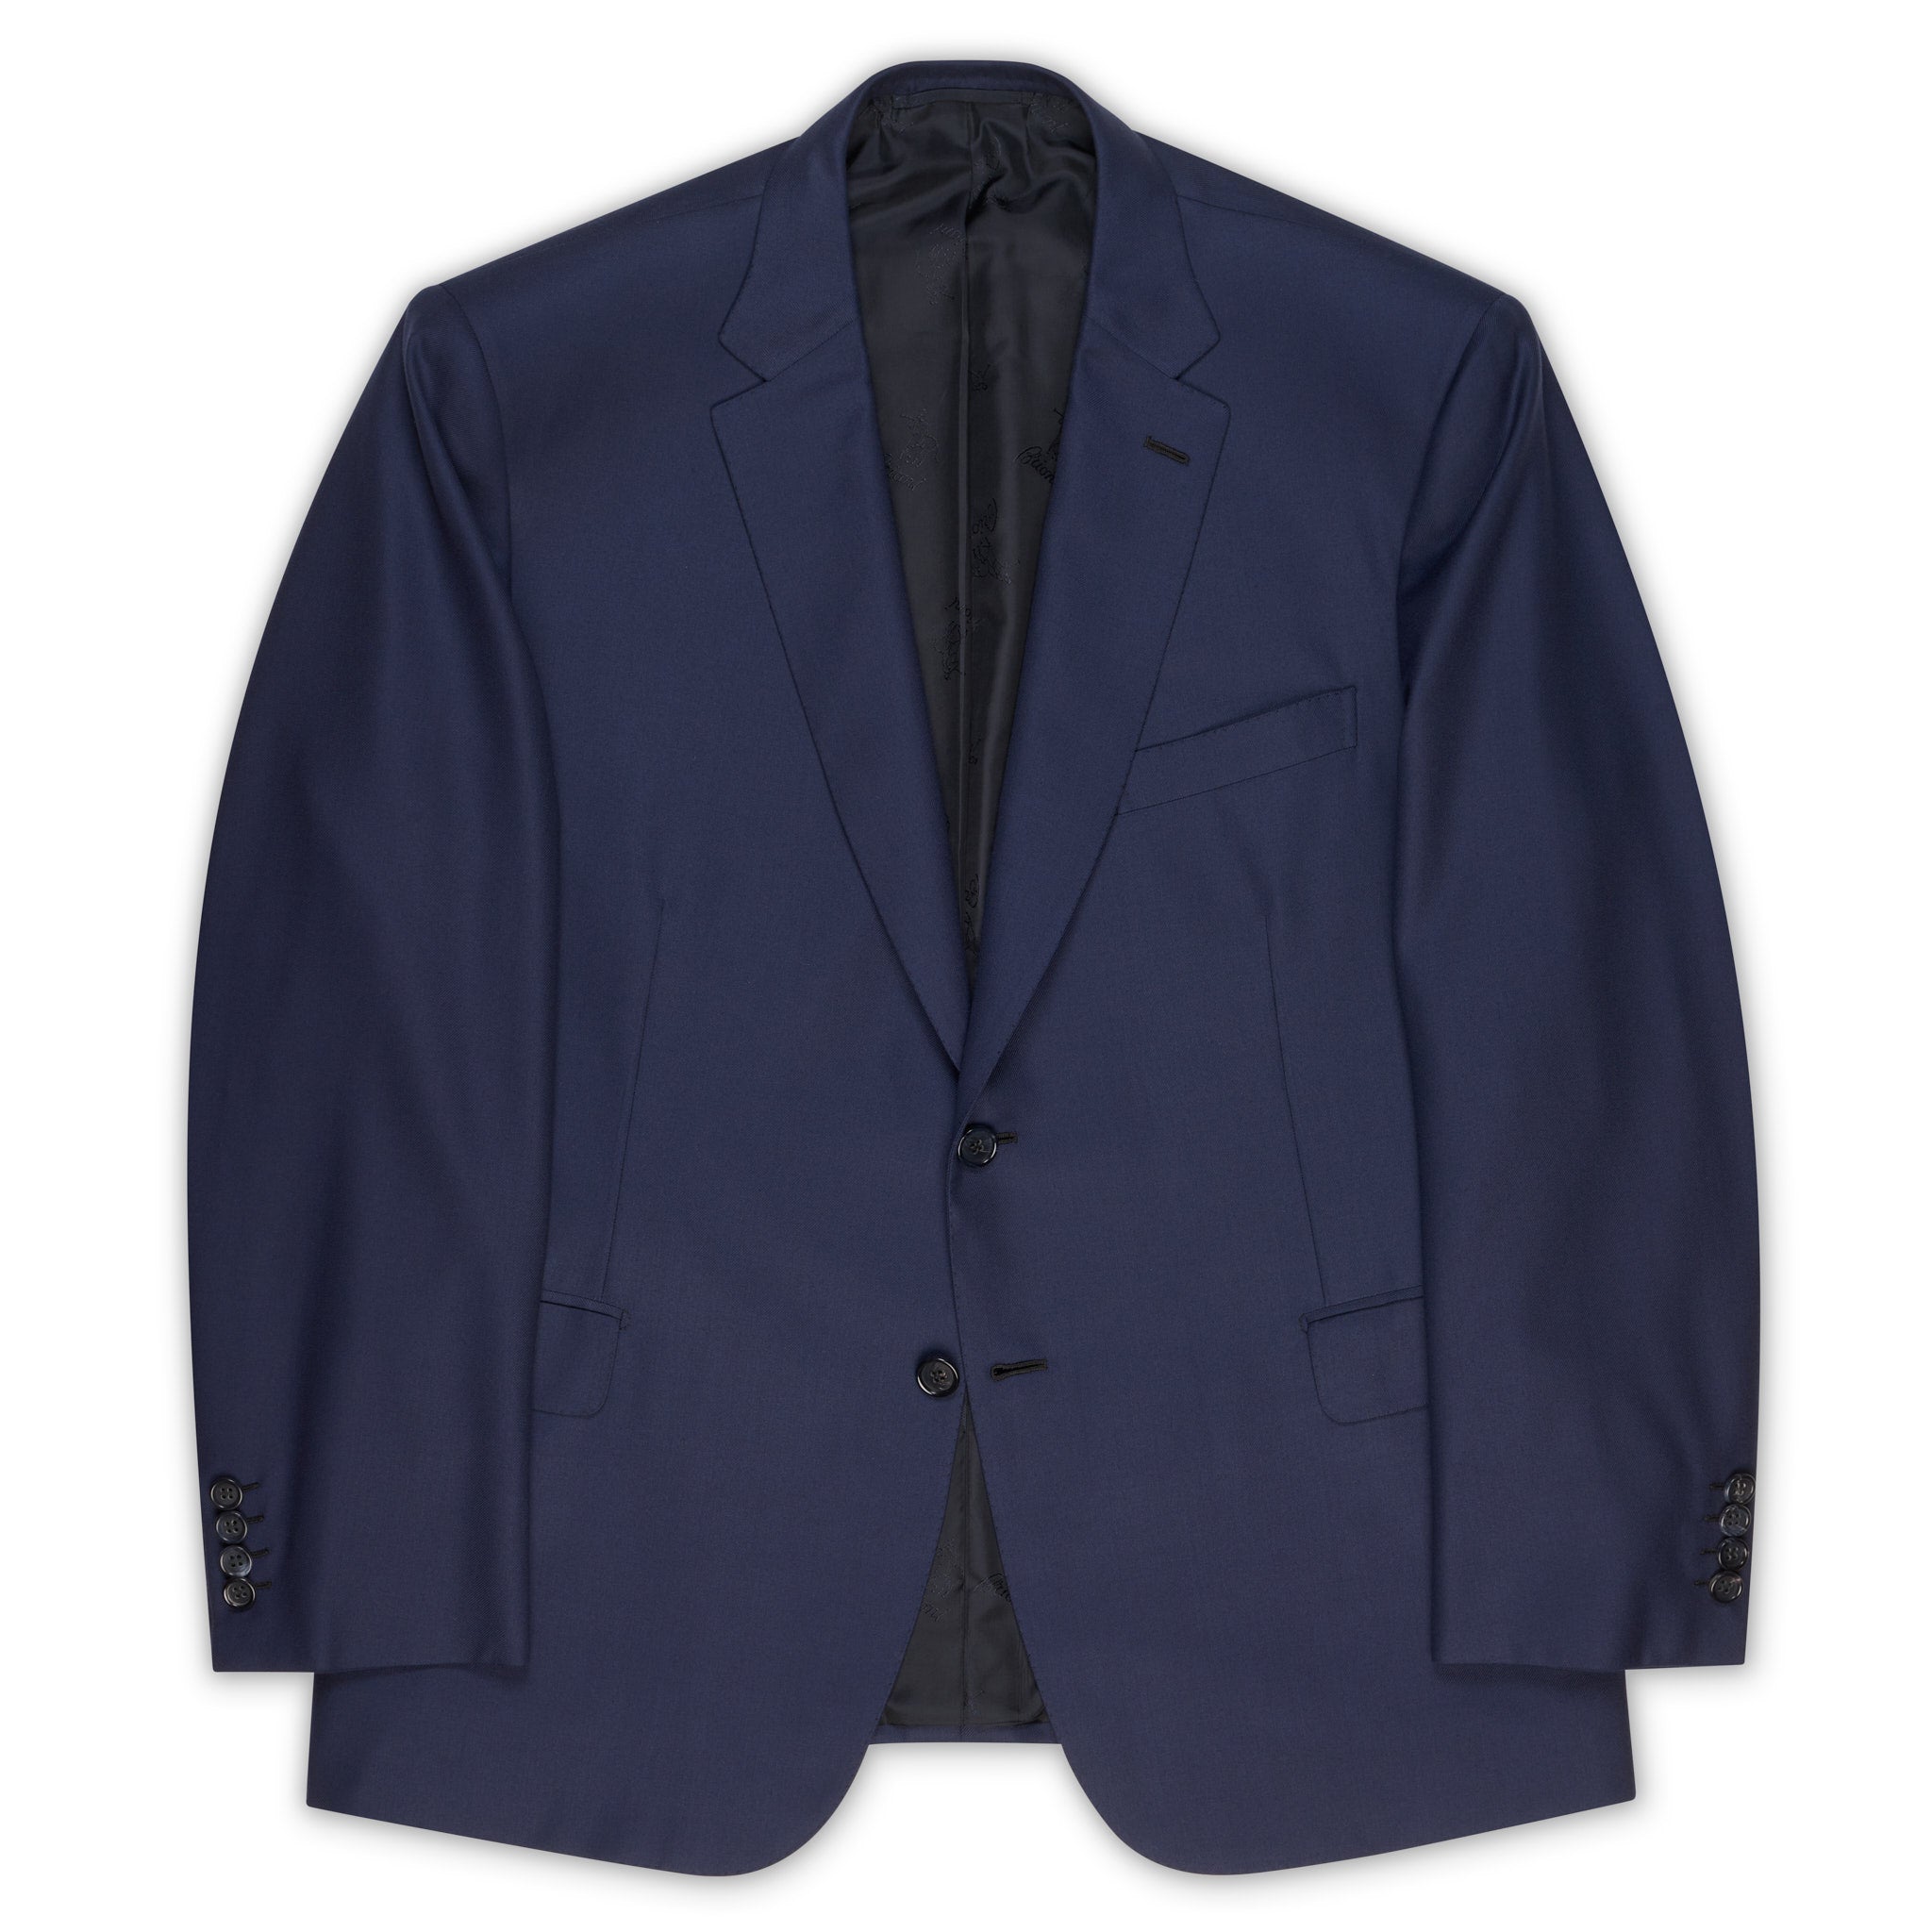 BRIONI "BRUNICO" Handmade Navy Blue Super 150's Jacket Blazer NEW BRIONI